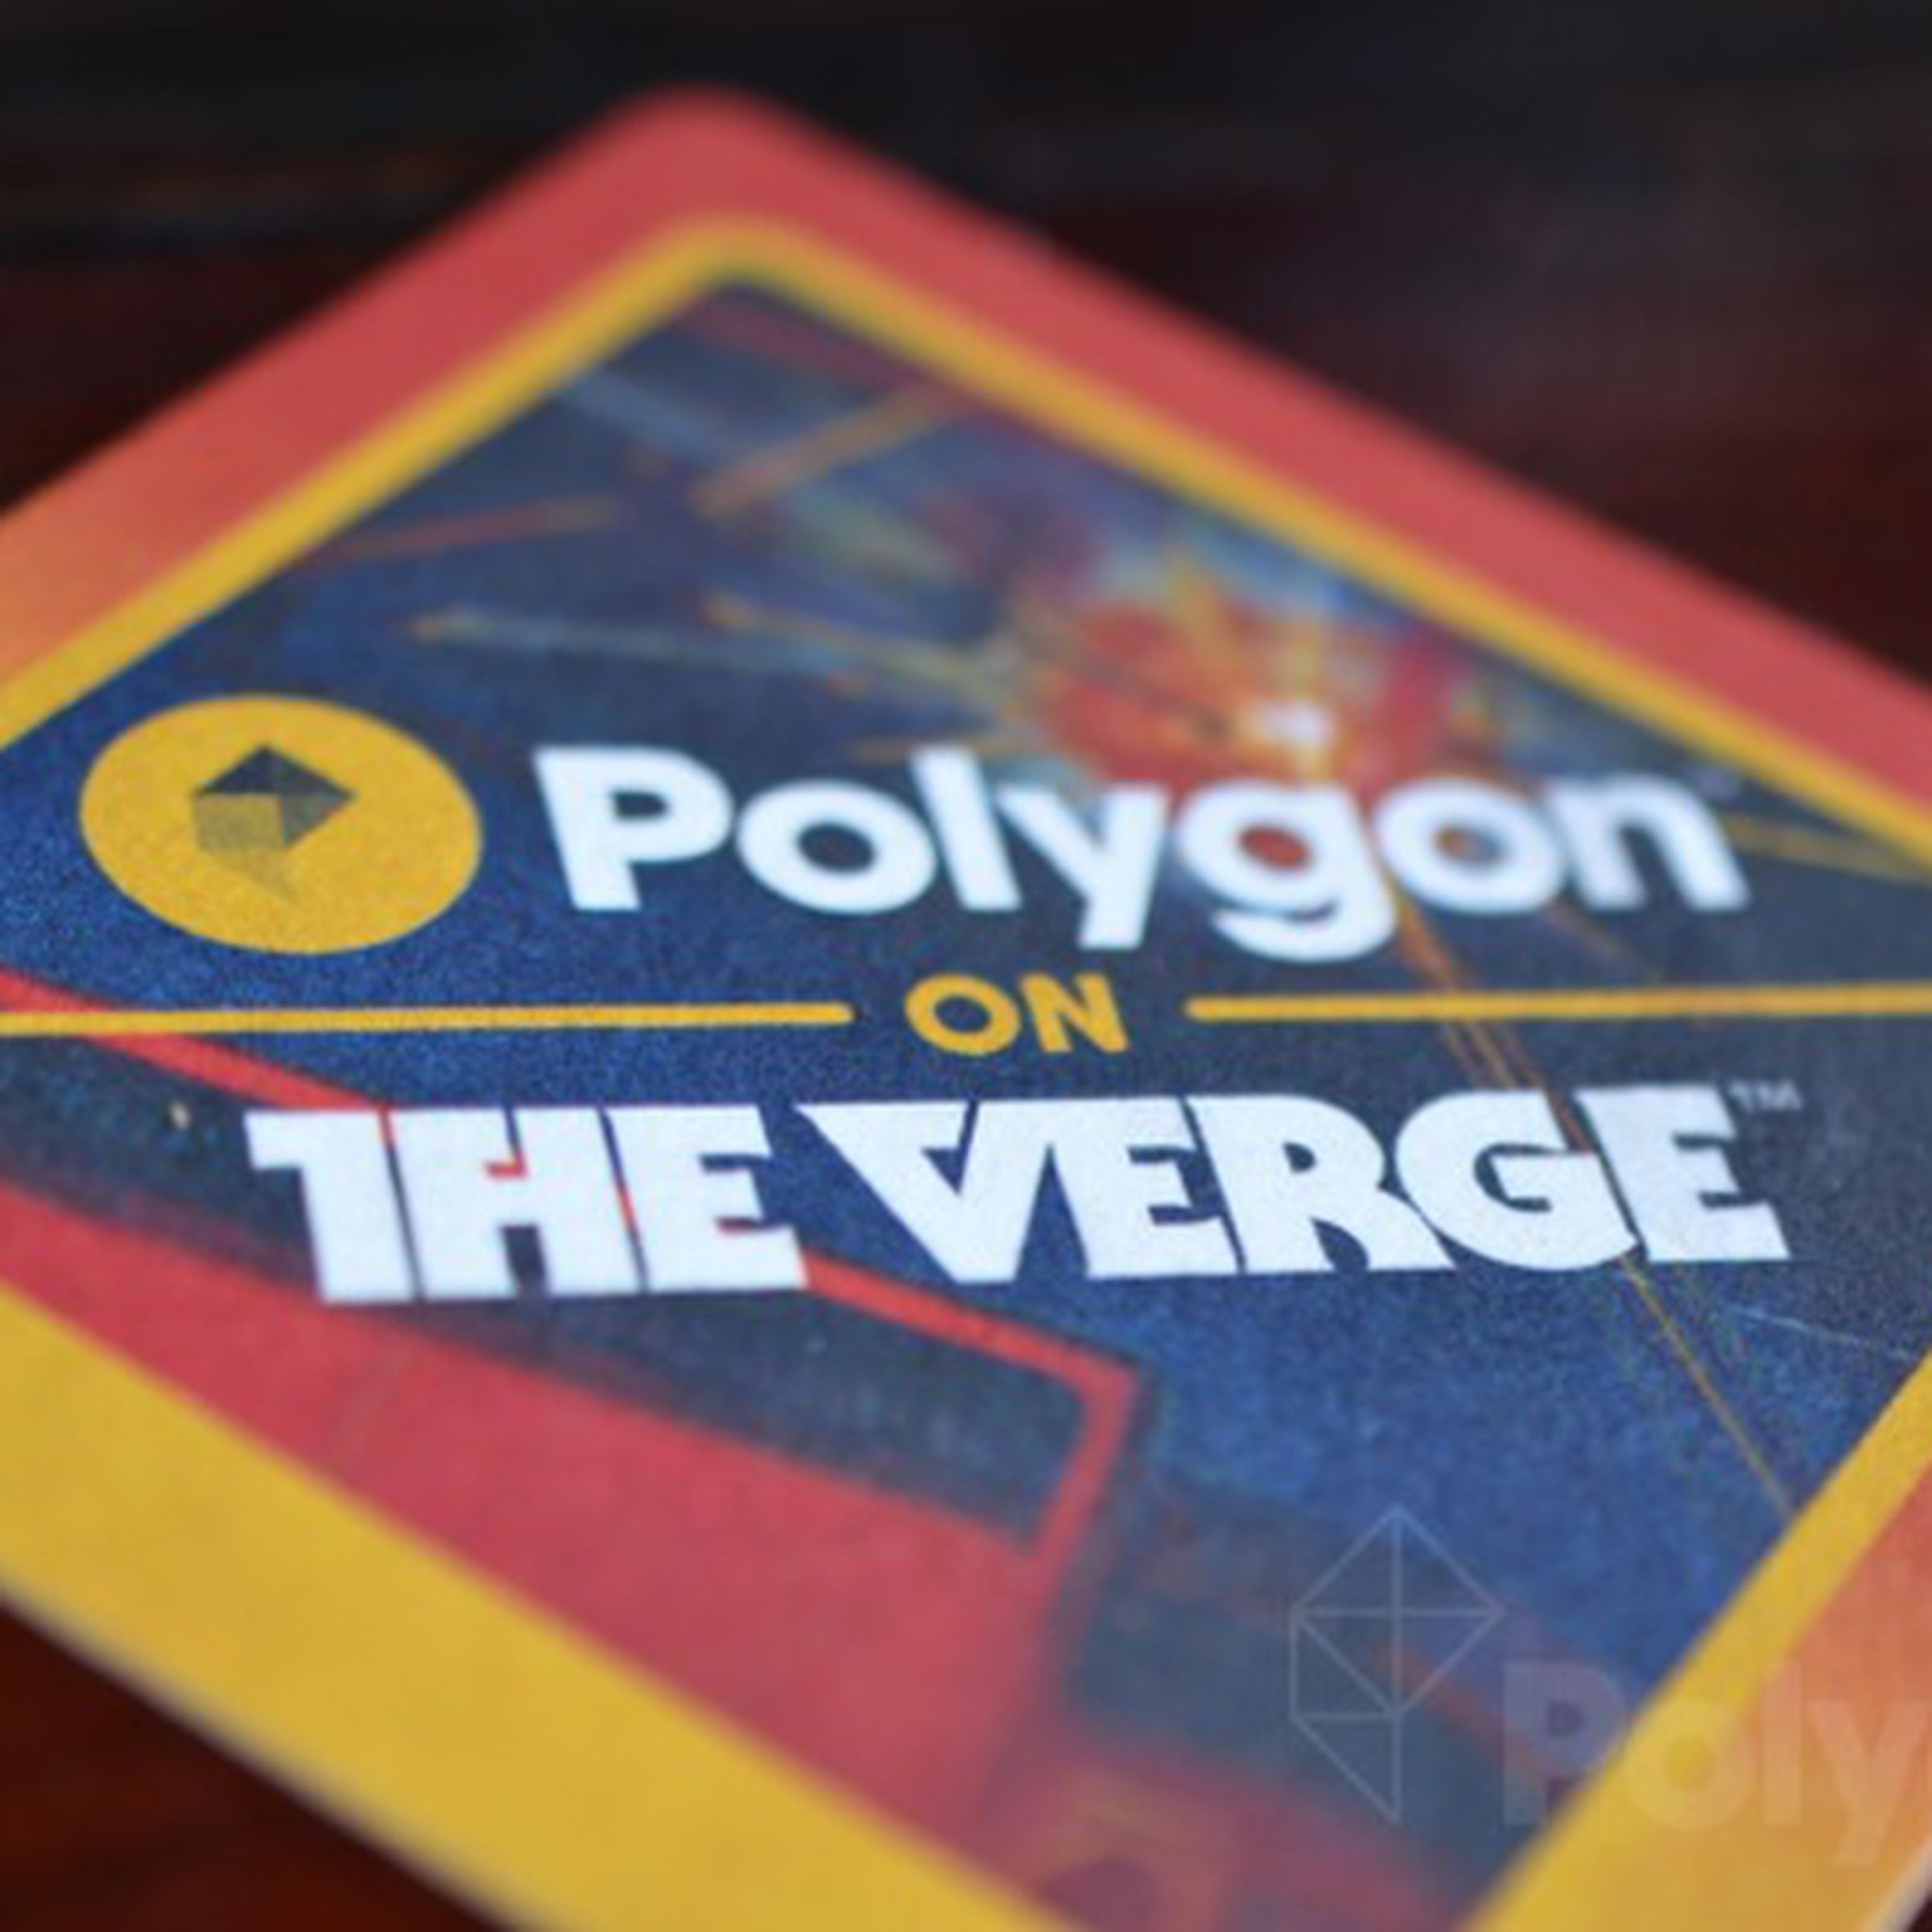 Polygon on the Verge coaster